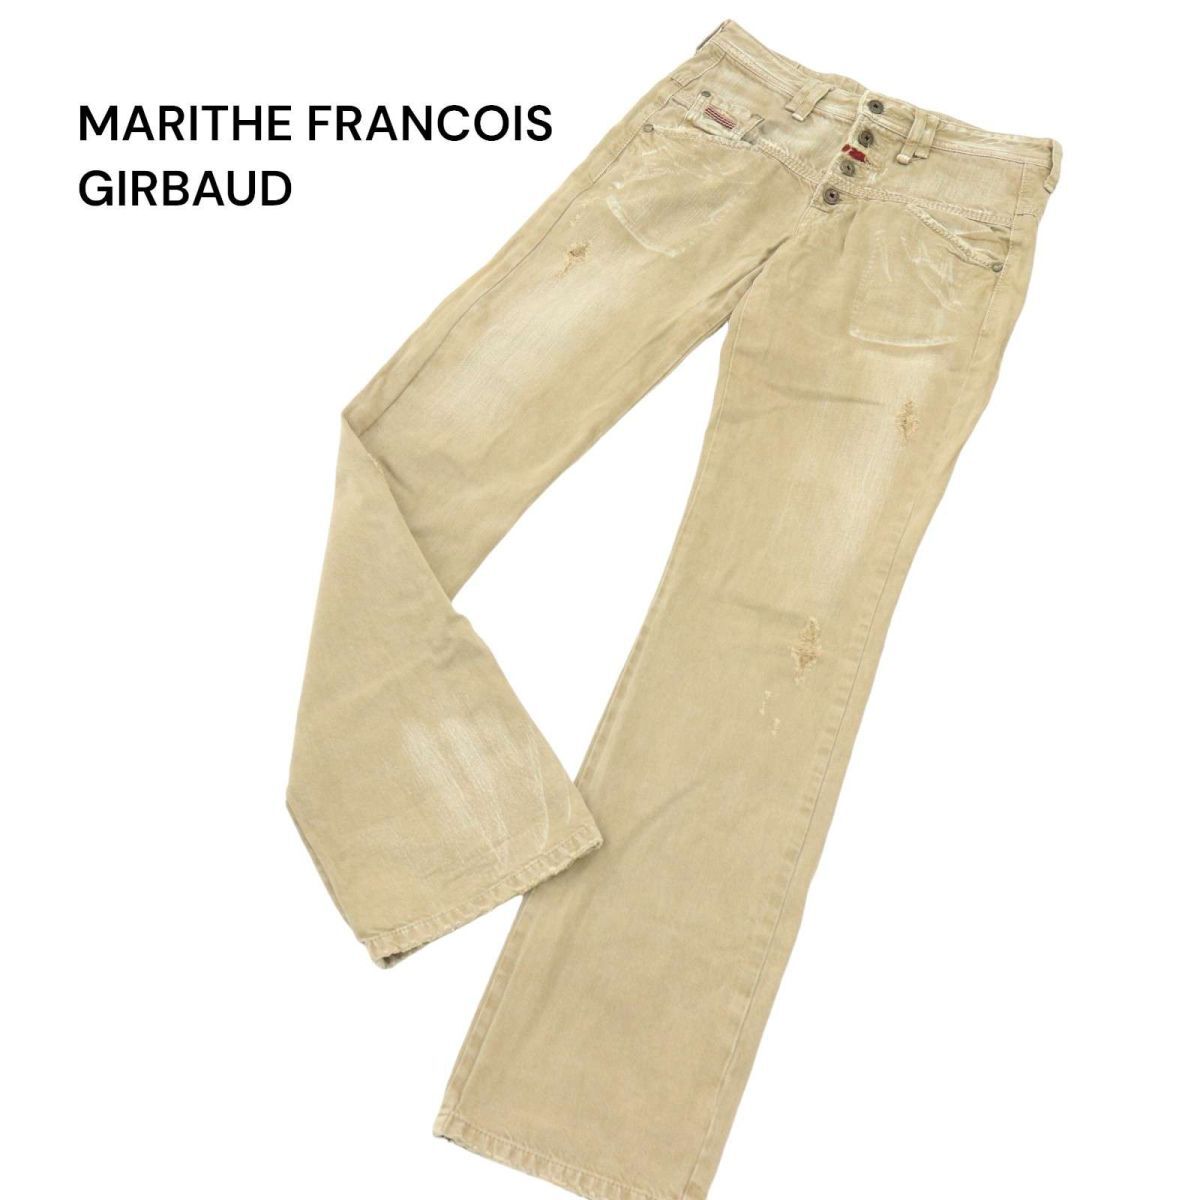 MARITHE FRANCOIS GIRBAUD Мали te franc sowa Jill bo- повреждение обработка * ботинки cut Denim брюки джинсы Sz.S мужской A4B01615_3#R